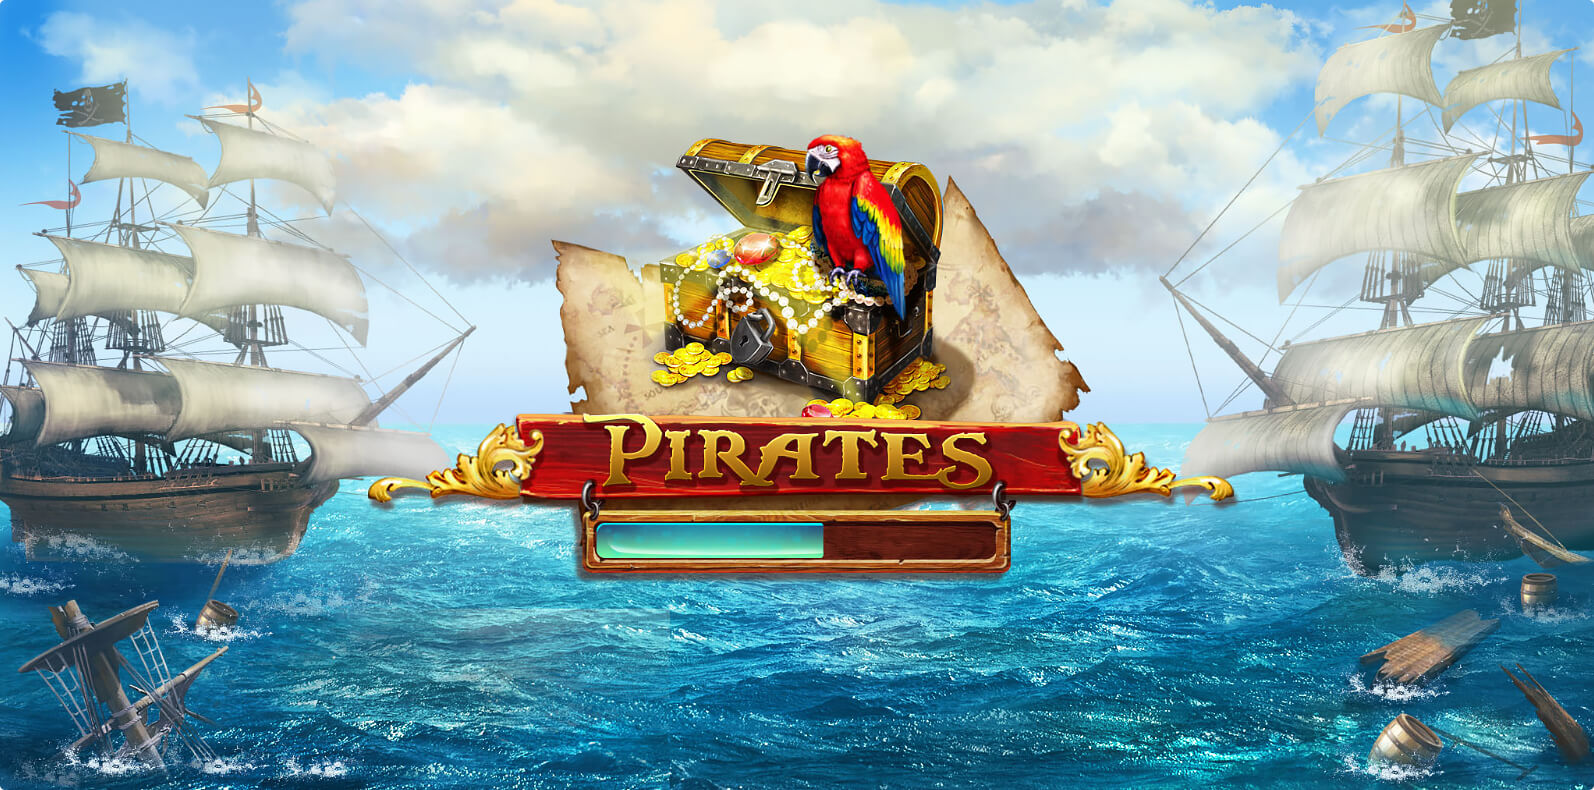 Pirates theme design and animation creation